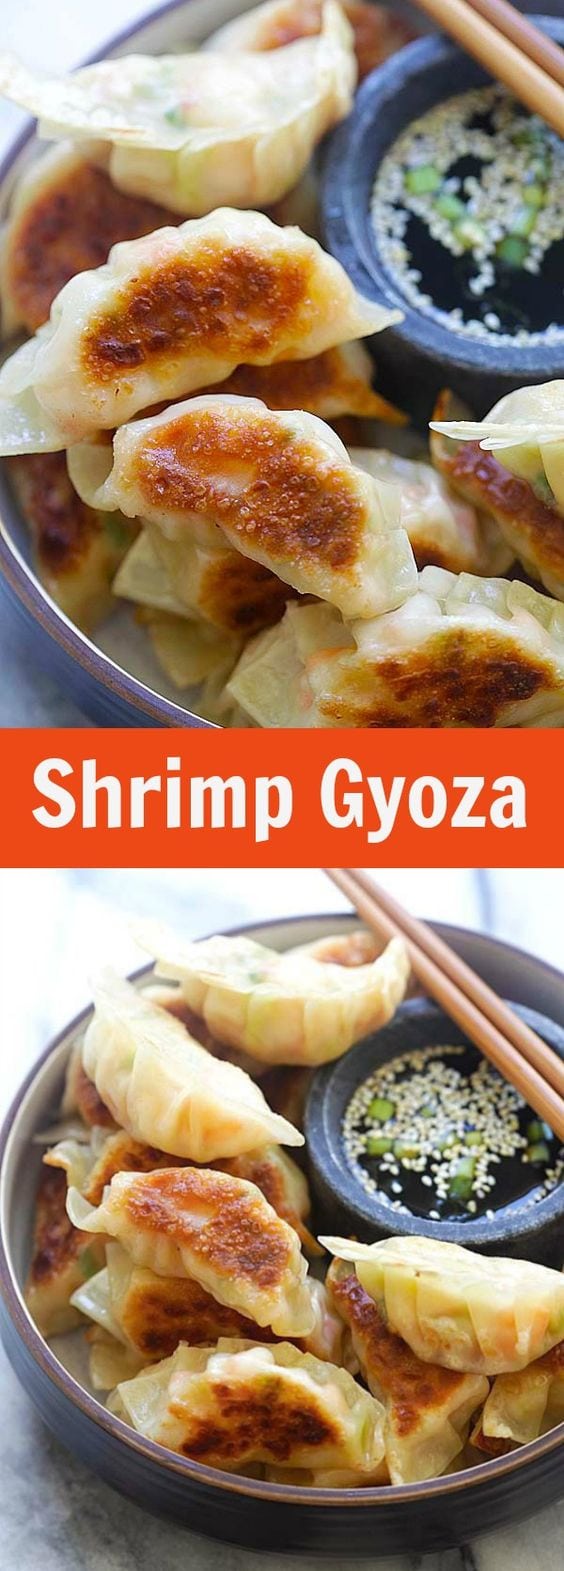 Shrimp Gyoza - amazing Japanese gyoza dumplings filled with shrimp and cabbage. Crispy, juicy and so easy to make at home. | rasamalaysia.com